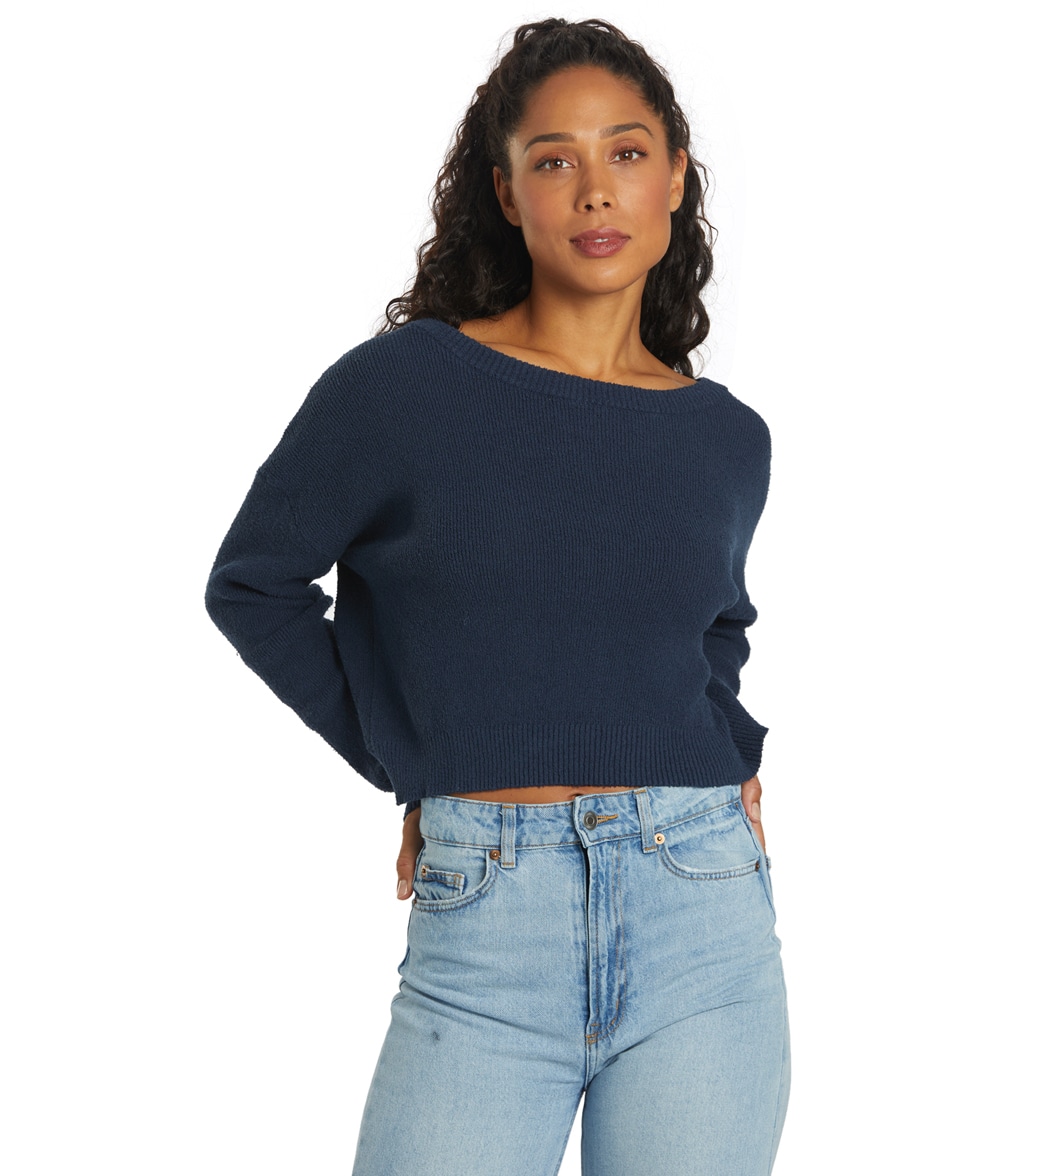 Hurley Women's Overlap Back Sweater Shirt - Mood Indigo Large Cotton - Swimoutlet.com